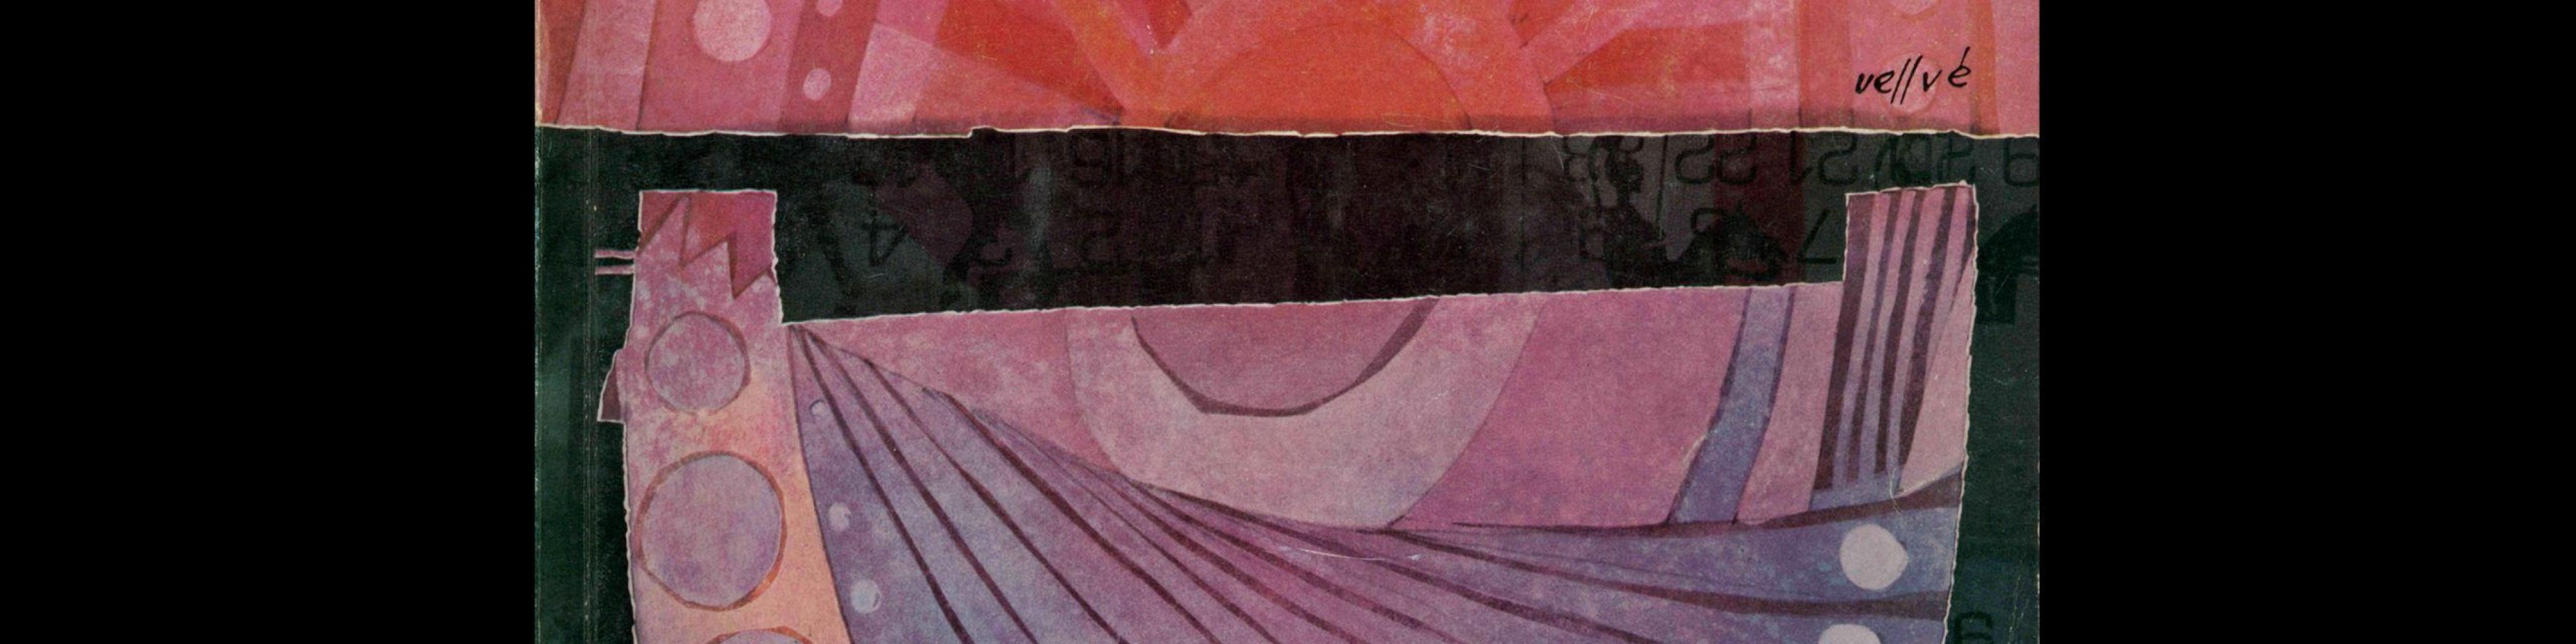 Gebrauchsgraphik, 8, 1965. Cover design by Tomás Vellvé